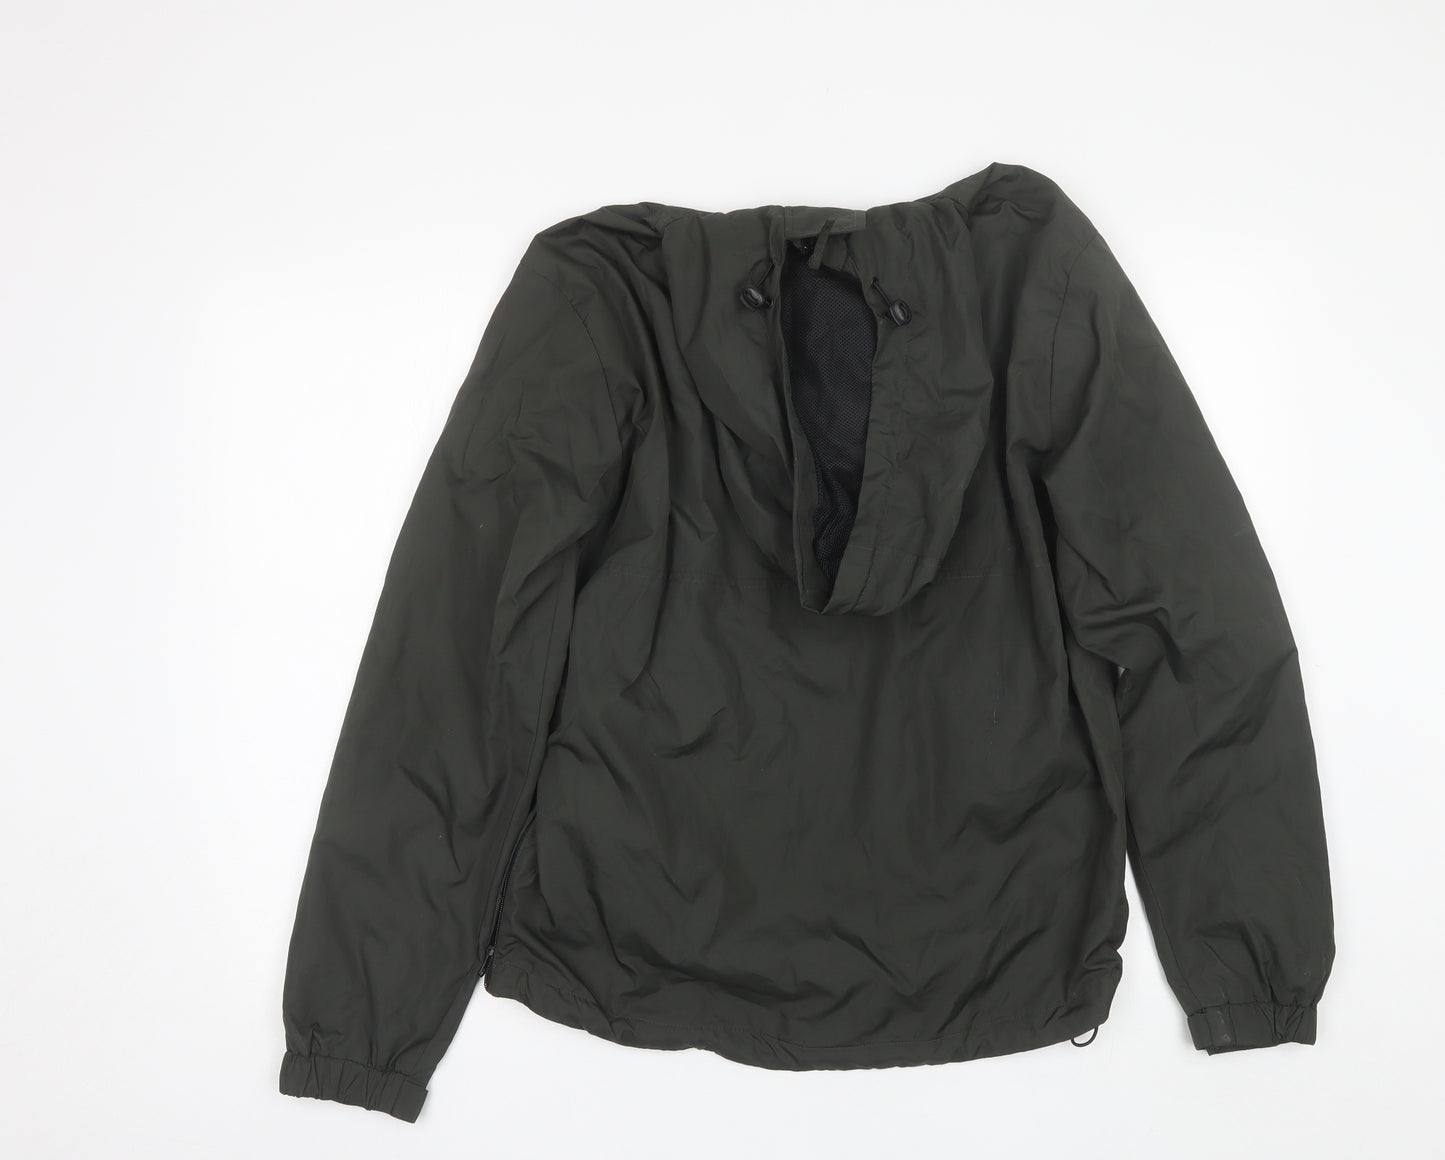 Primark Mens Green   Rain Coat Jacket Size S